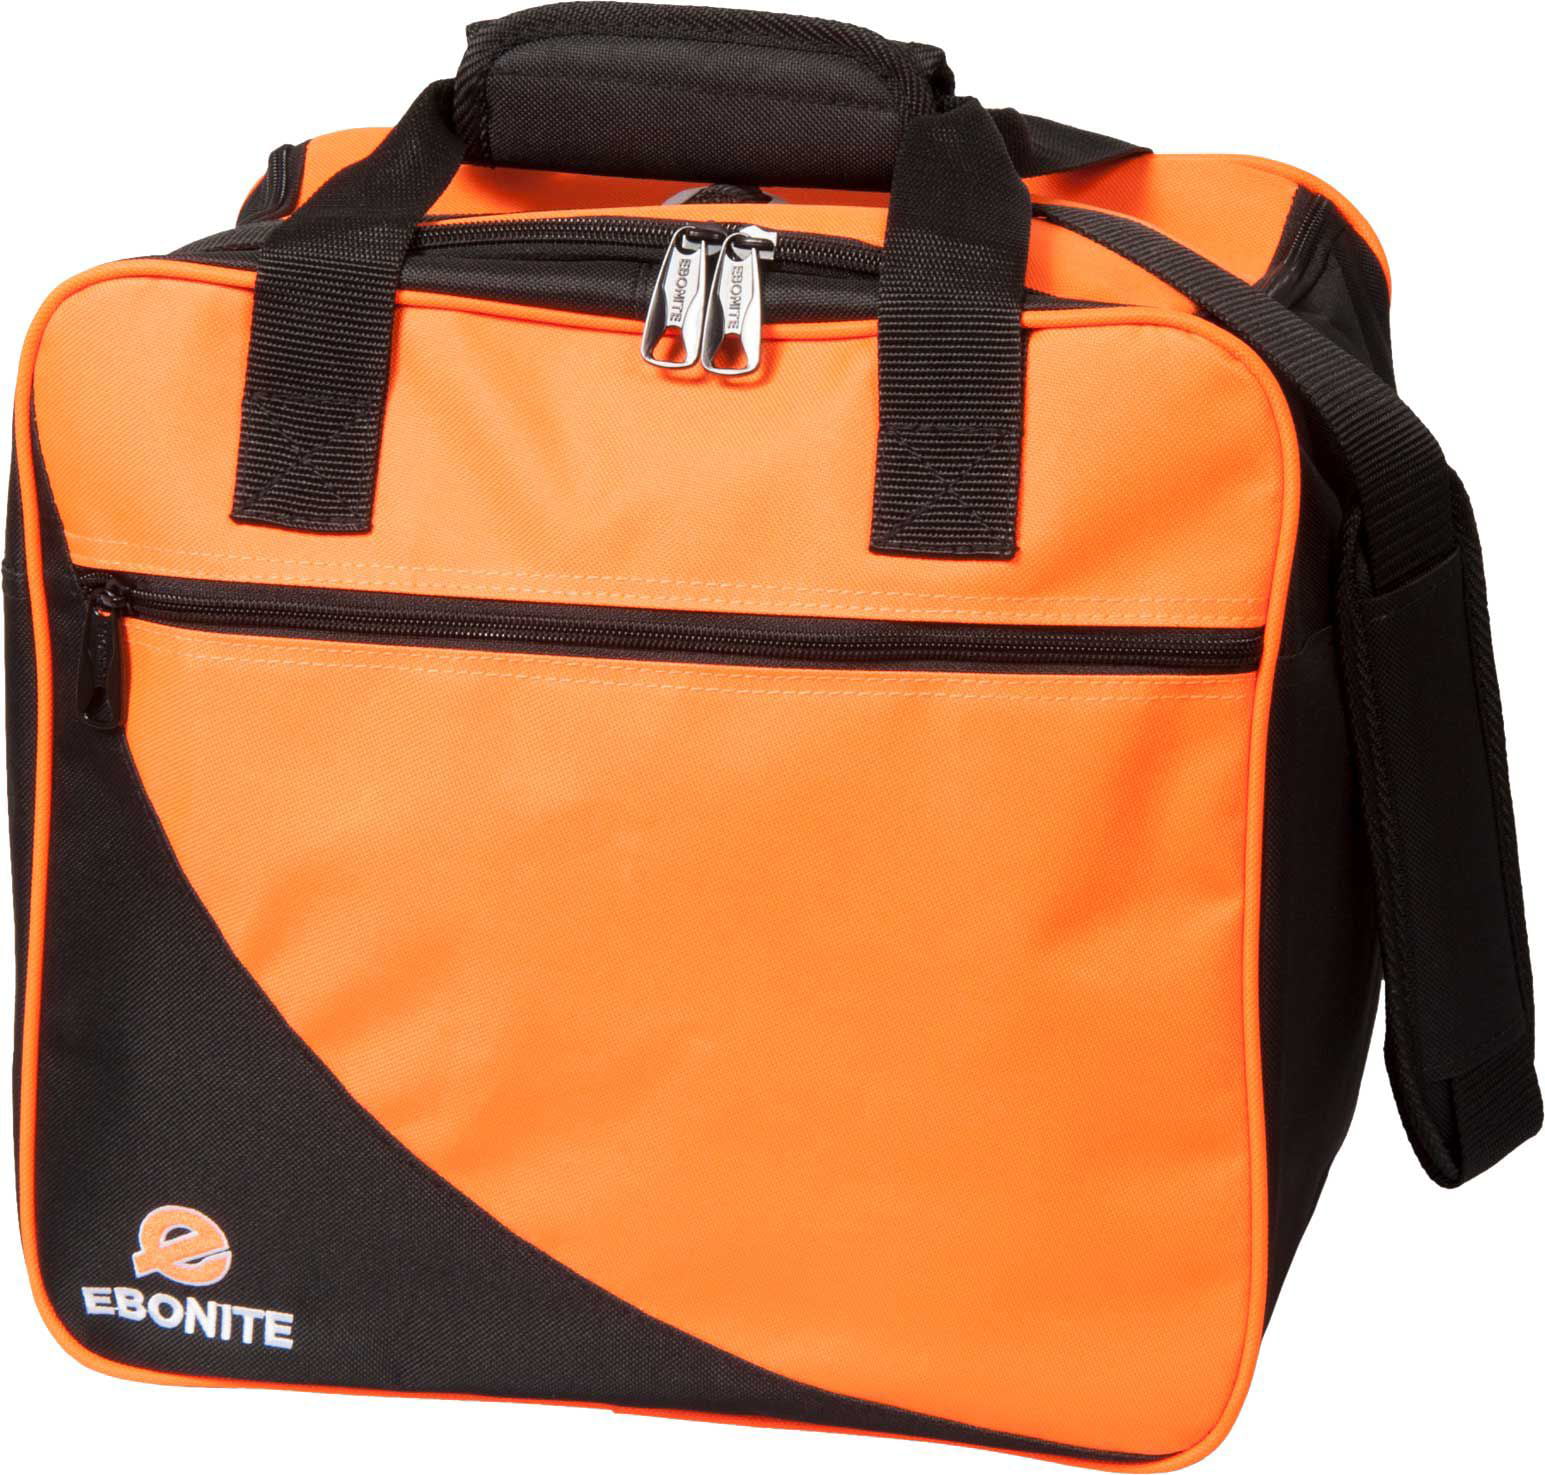 Ebonite Basic Shoulder Bag Tote 1 Ball Bowling Bag Orange 